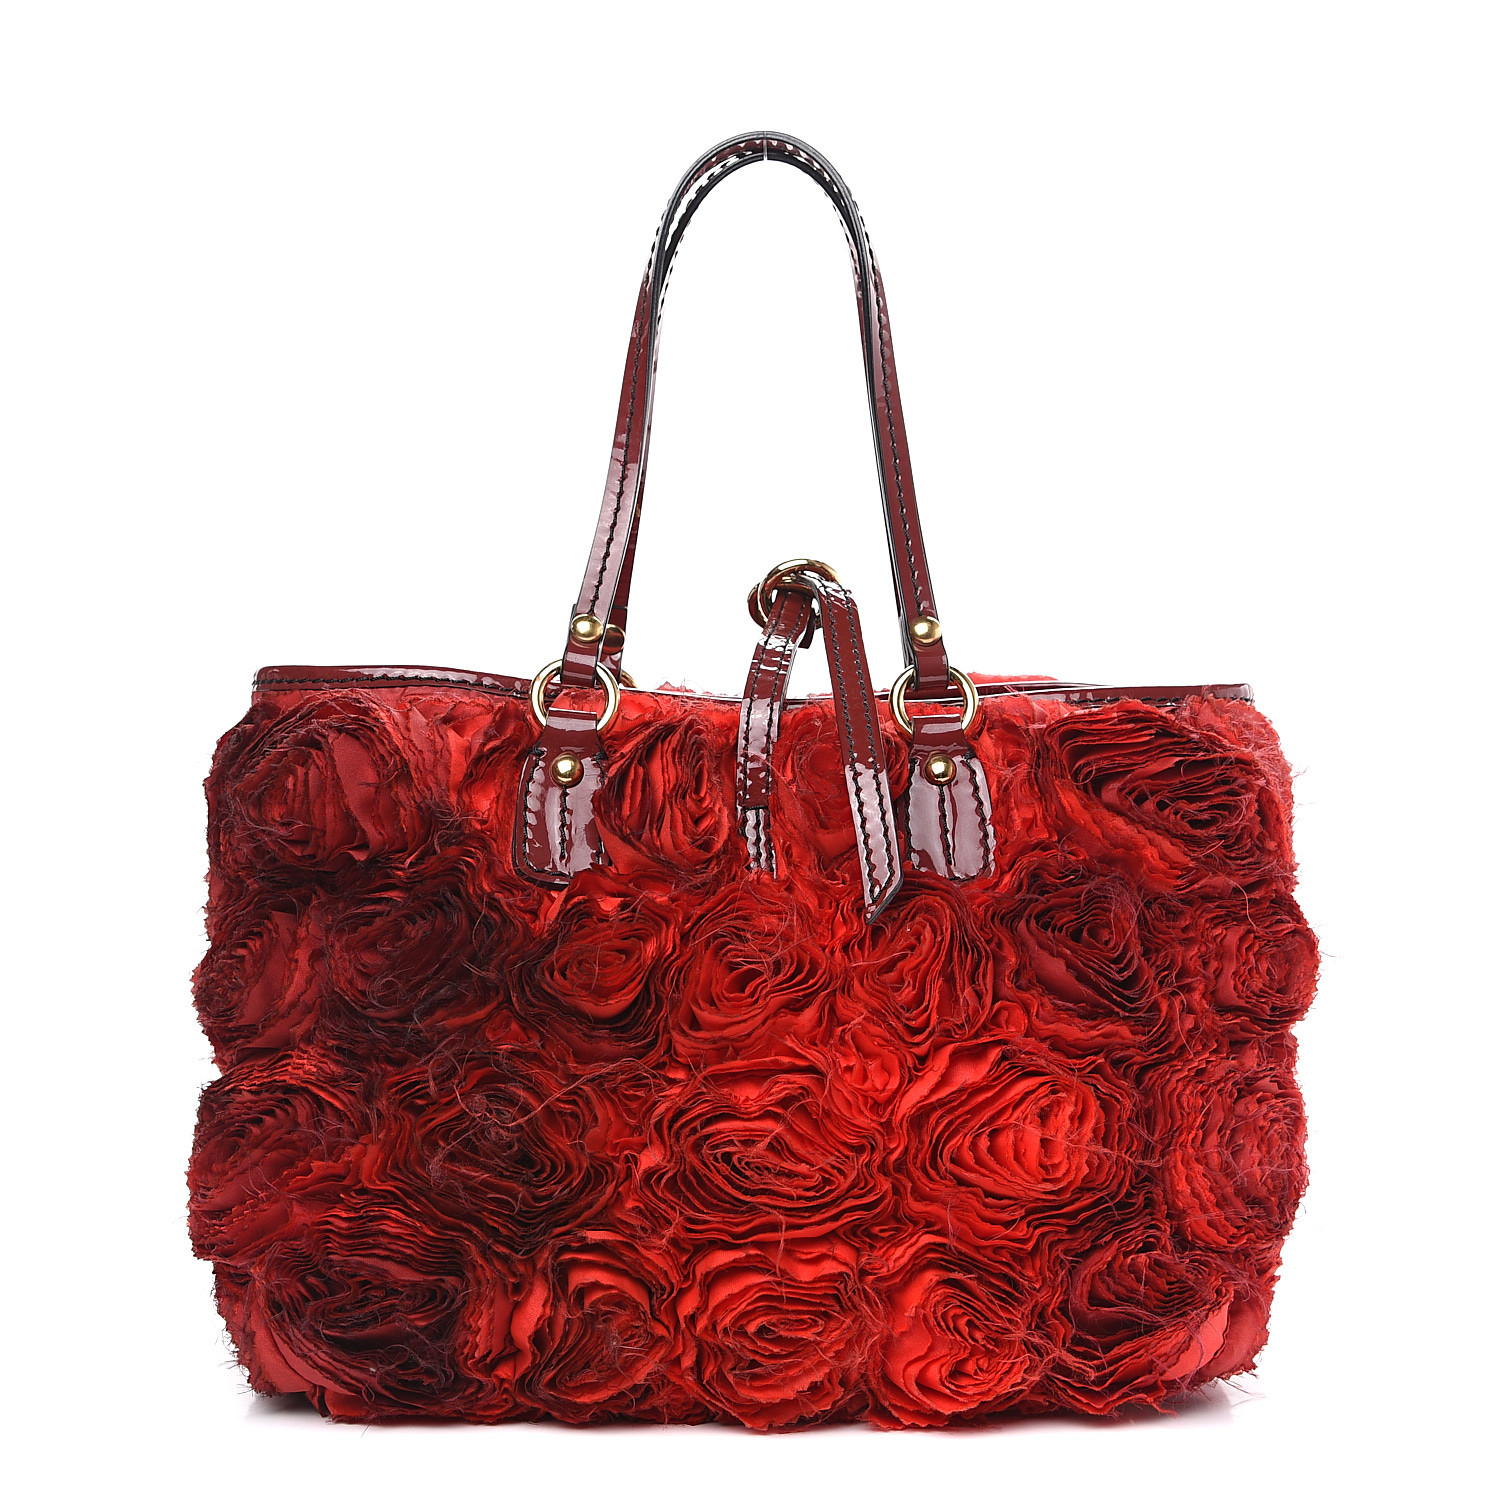 Valentino Patent Floral Applique Tote Bag Red 573809 Fashionphile